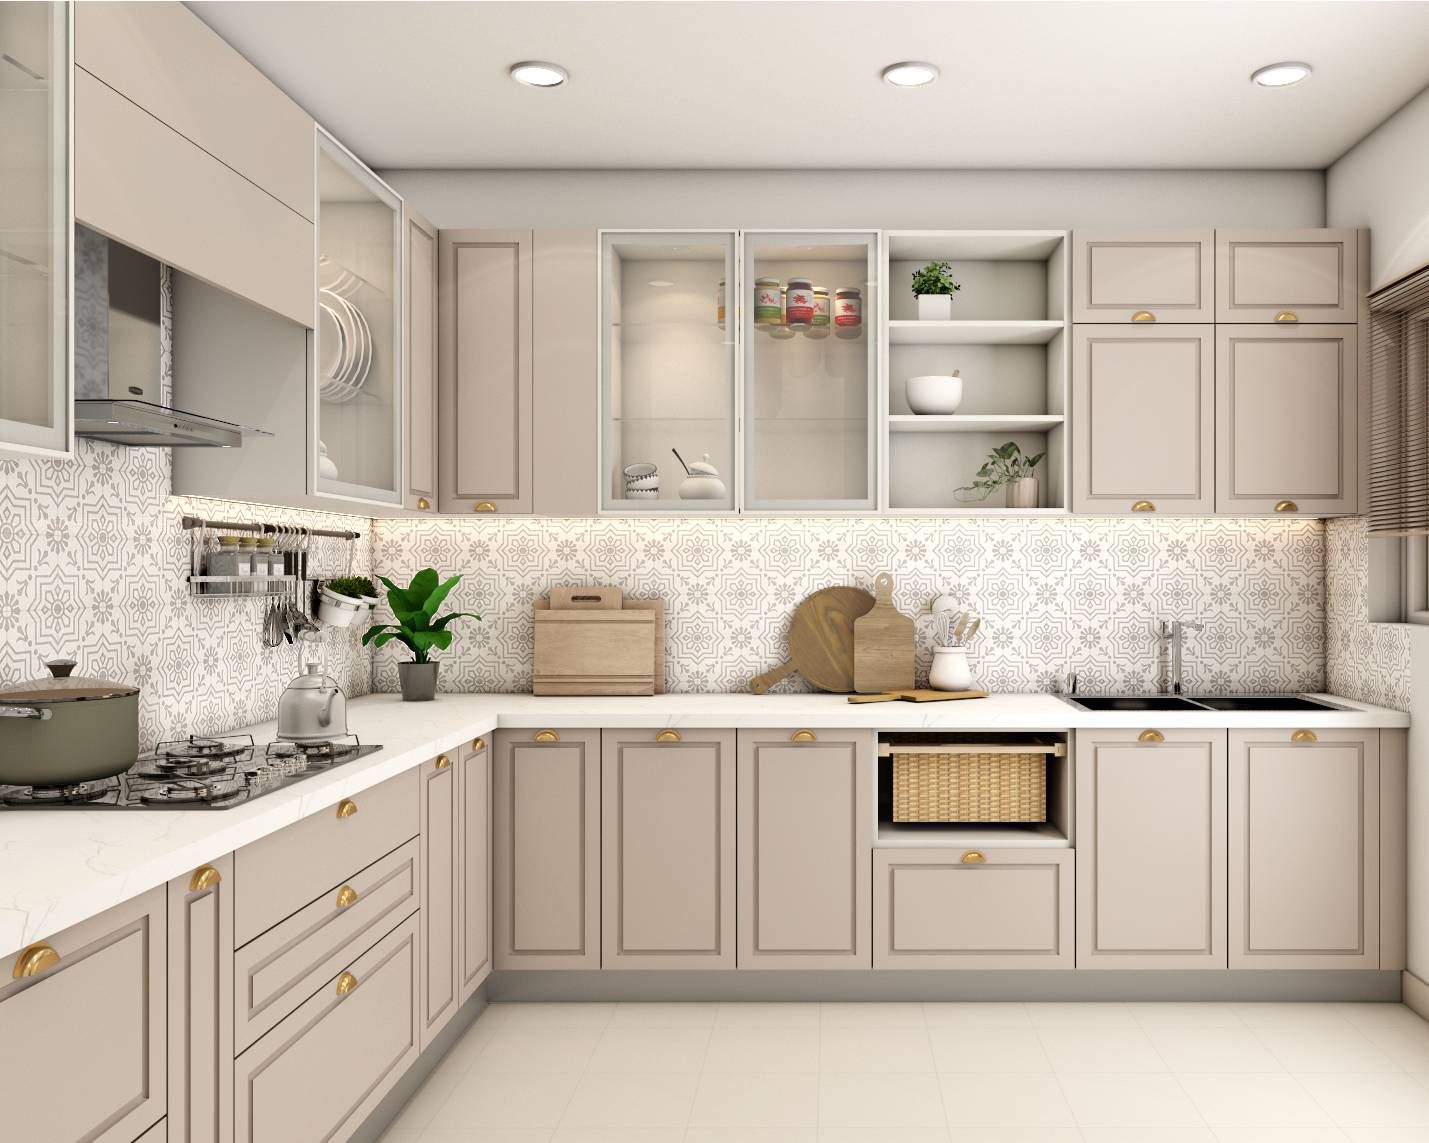 Modern Modular L-Shaped Kitchen Design With Cabinet Strip Lights